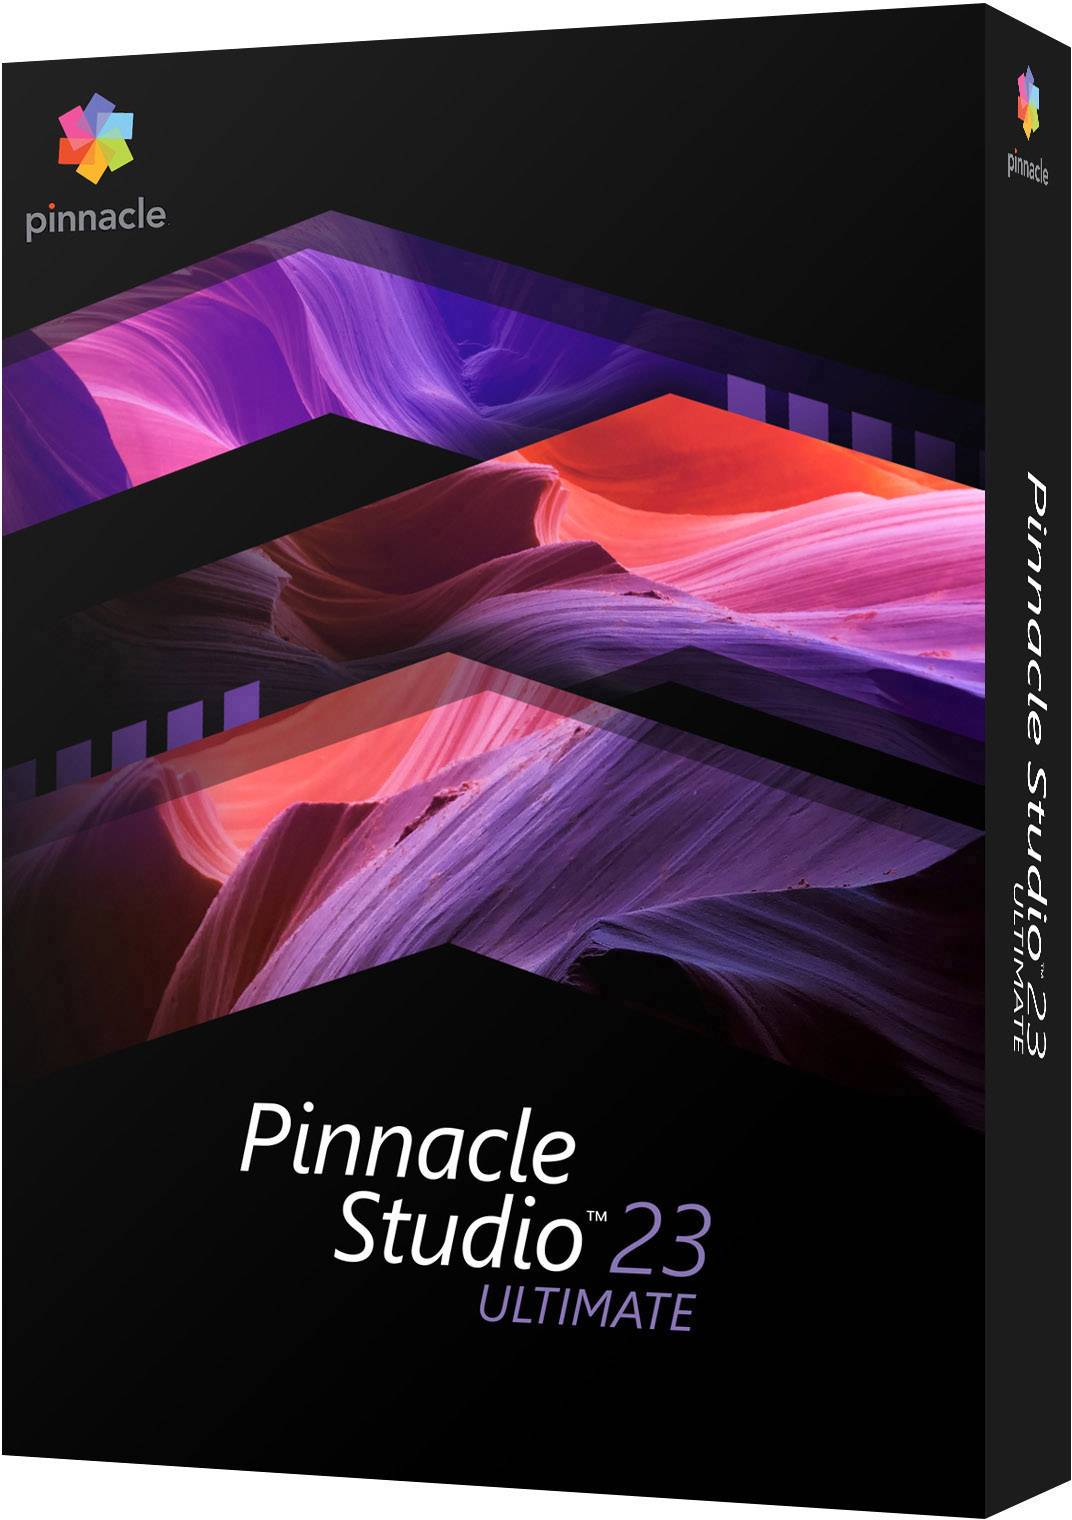 is pinnacle studio 23 good for video editing